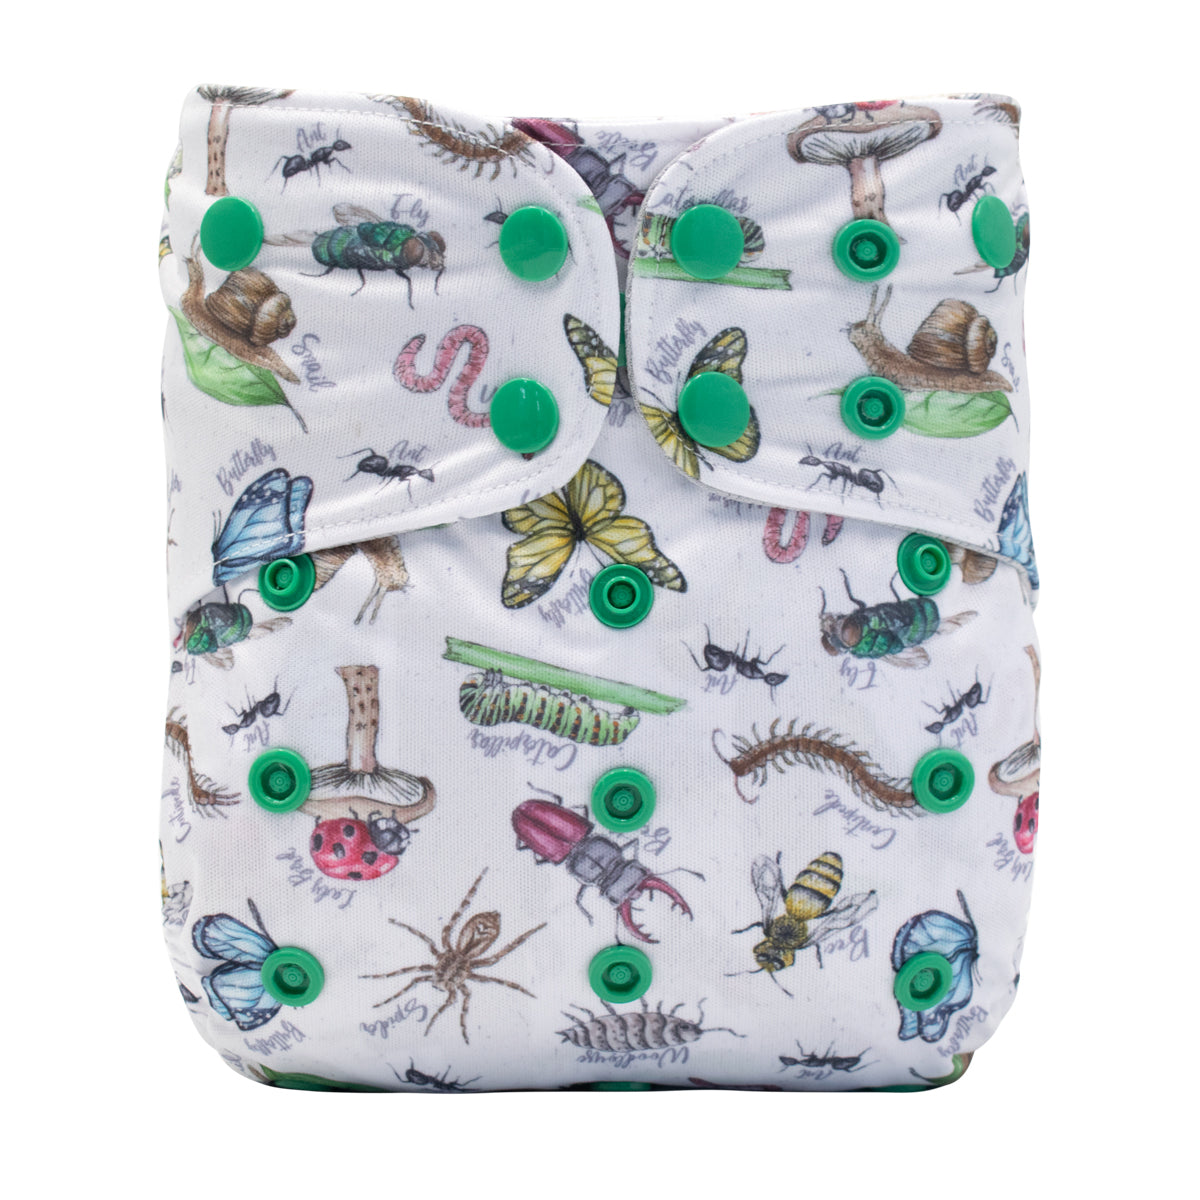 OS Pocket Diaper - Bugs Life